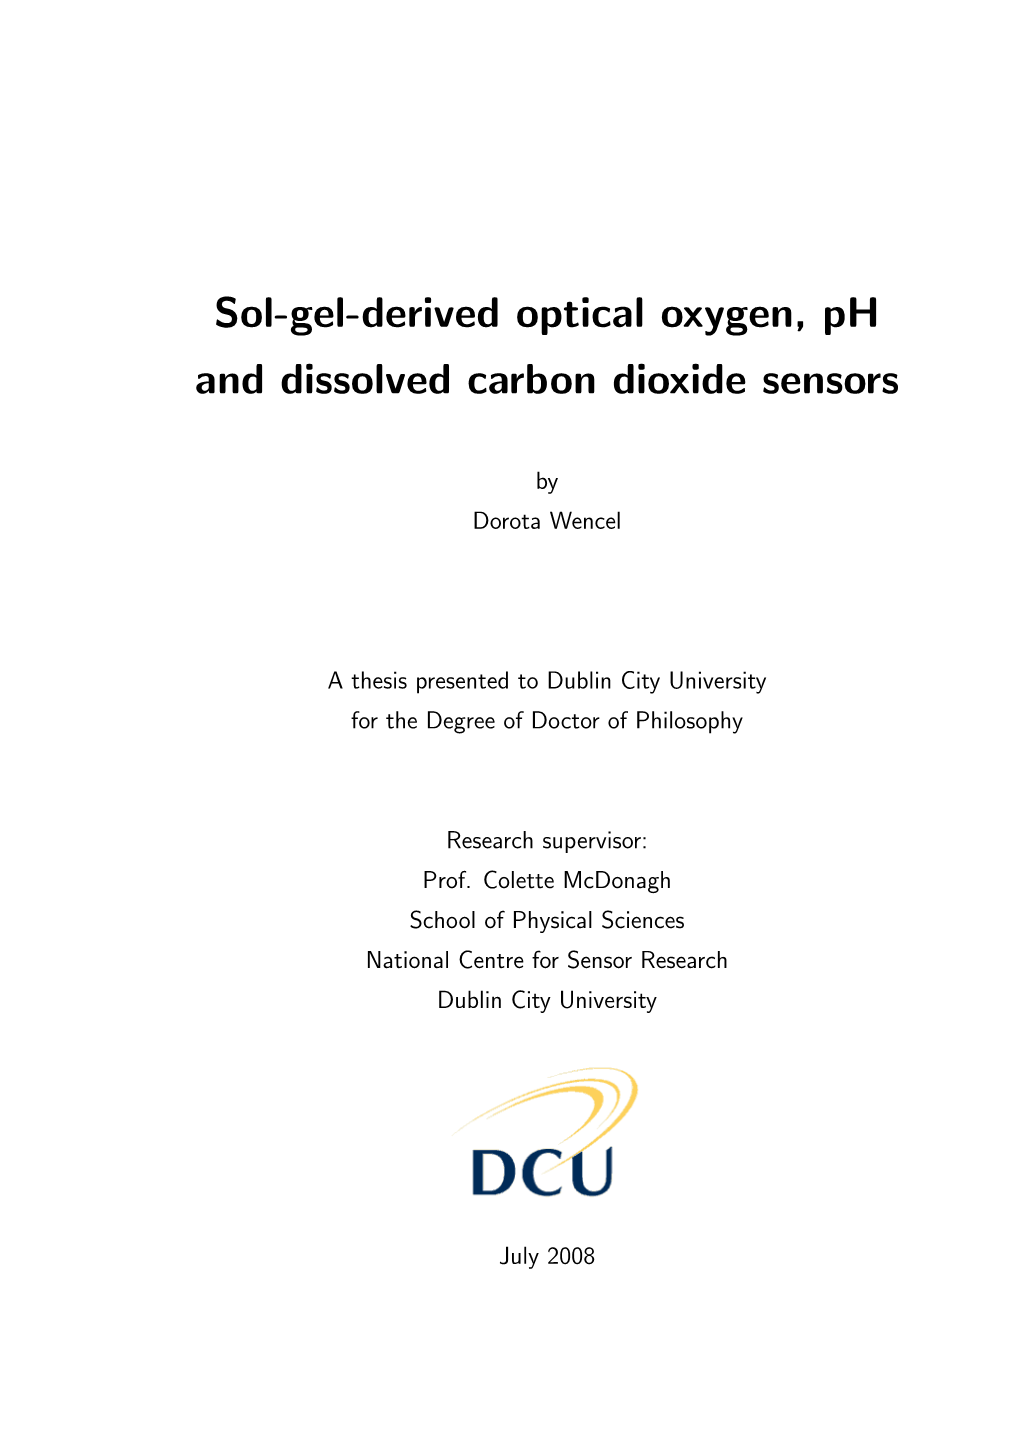 Sol-Gel-Derived Optical Oxygen, Ph and Dissolved Carbon Dioxide Sensors